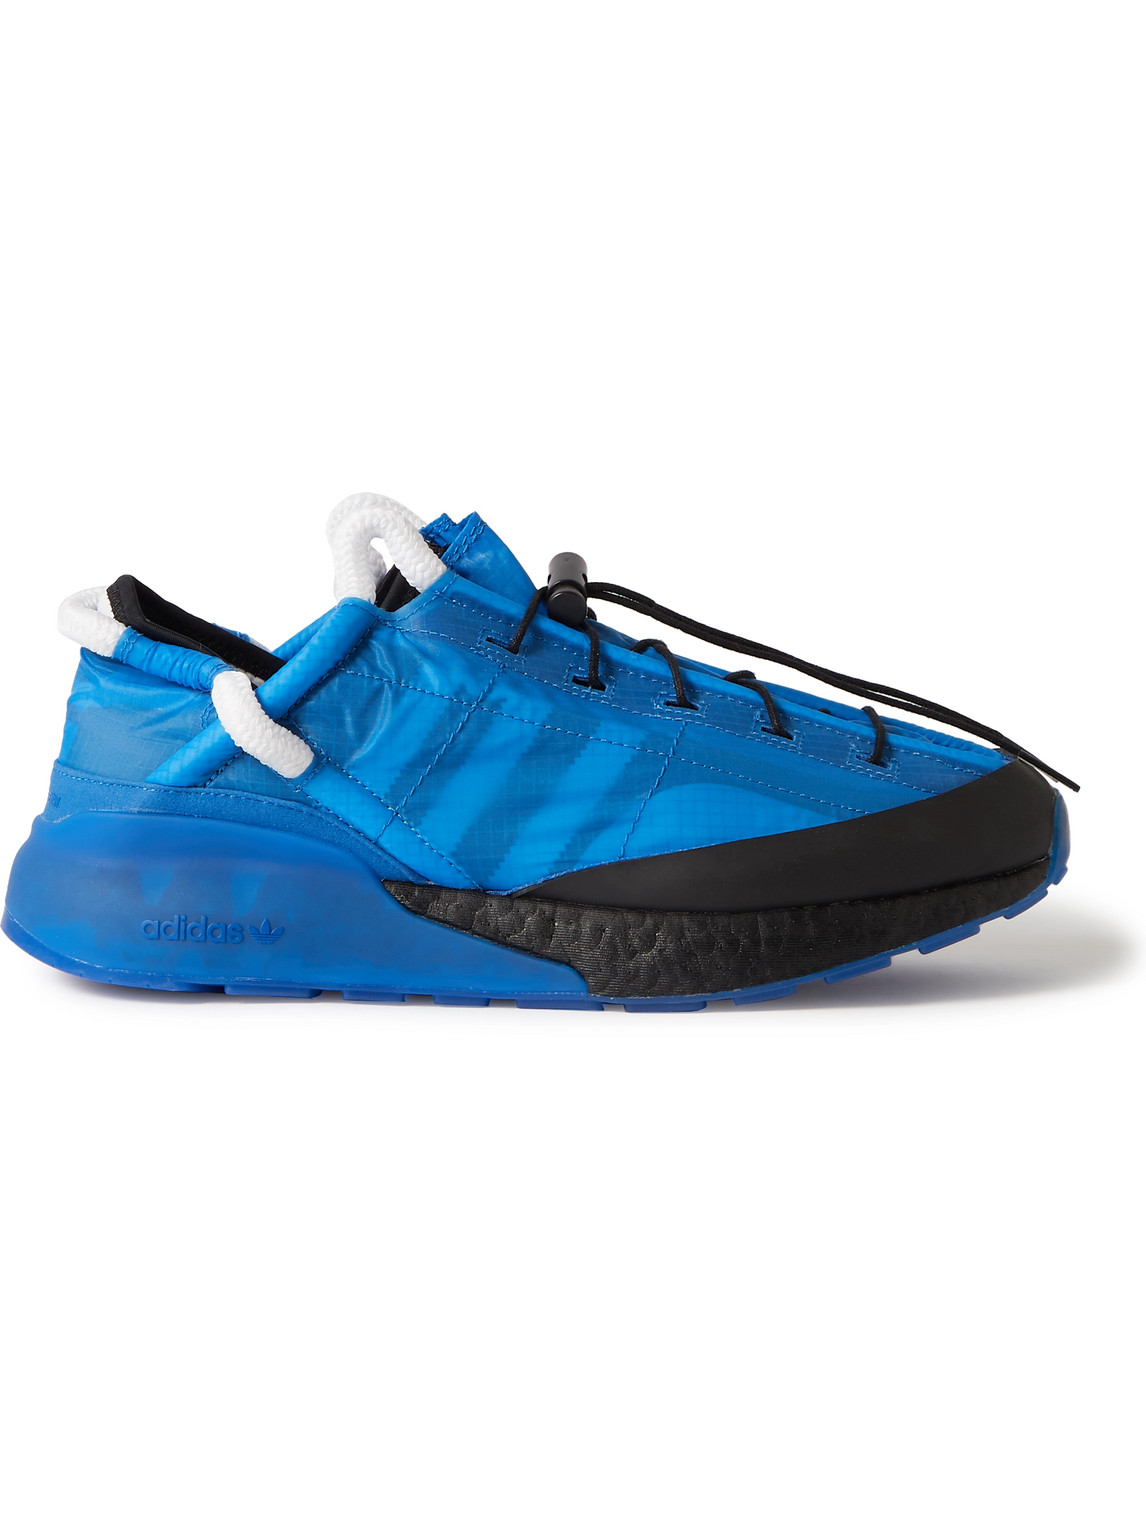 Adidas Consortium Craig Green Phomar I Ripstop Sneakers In Blue